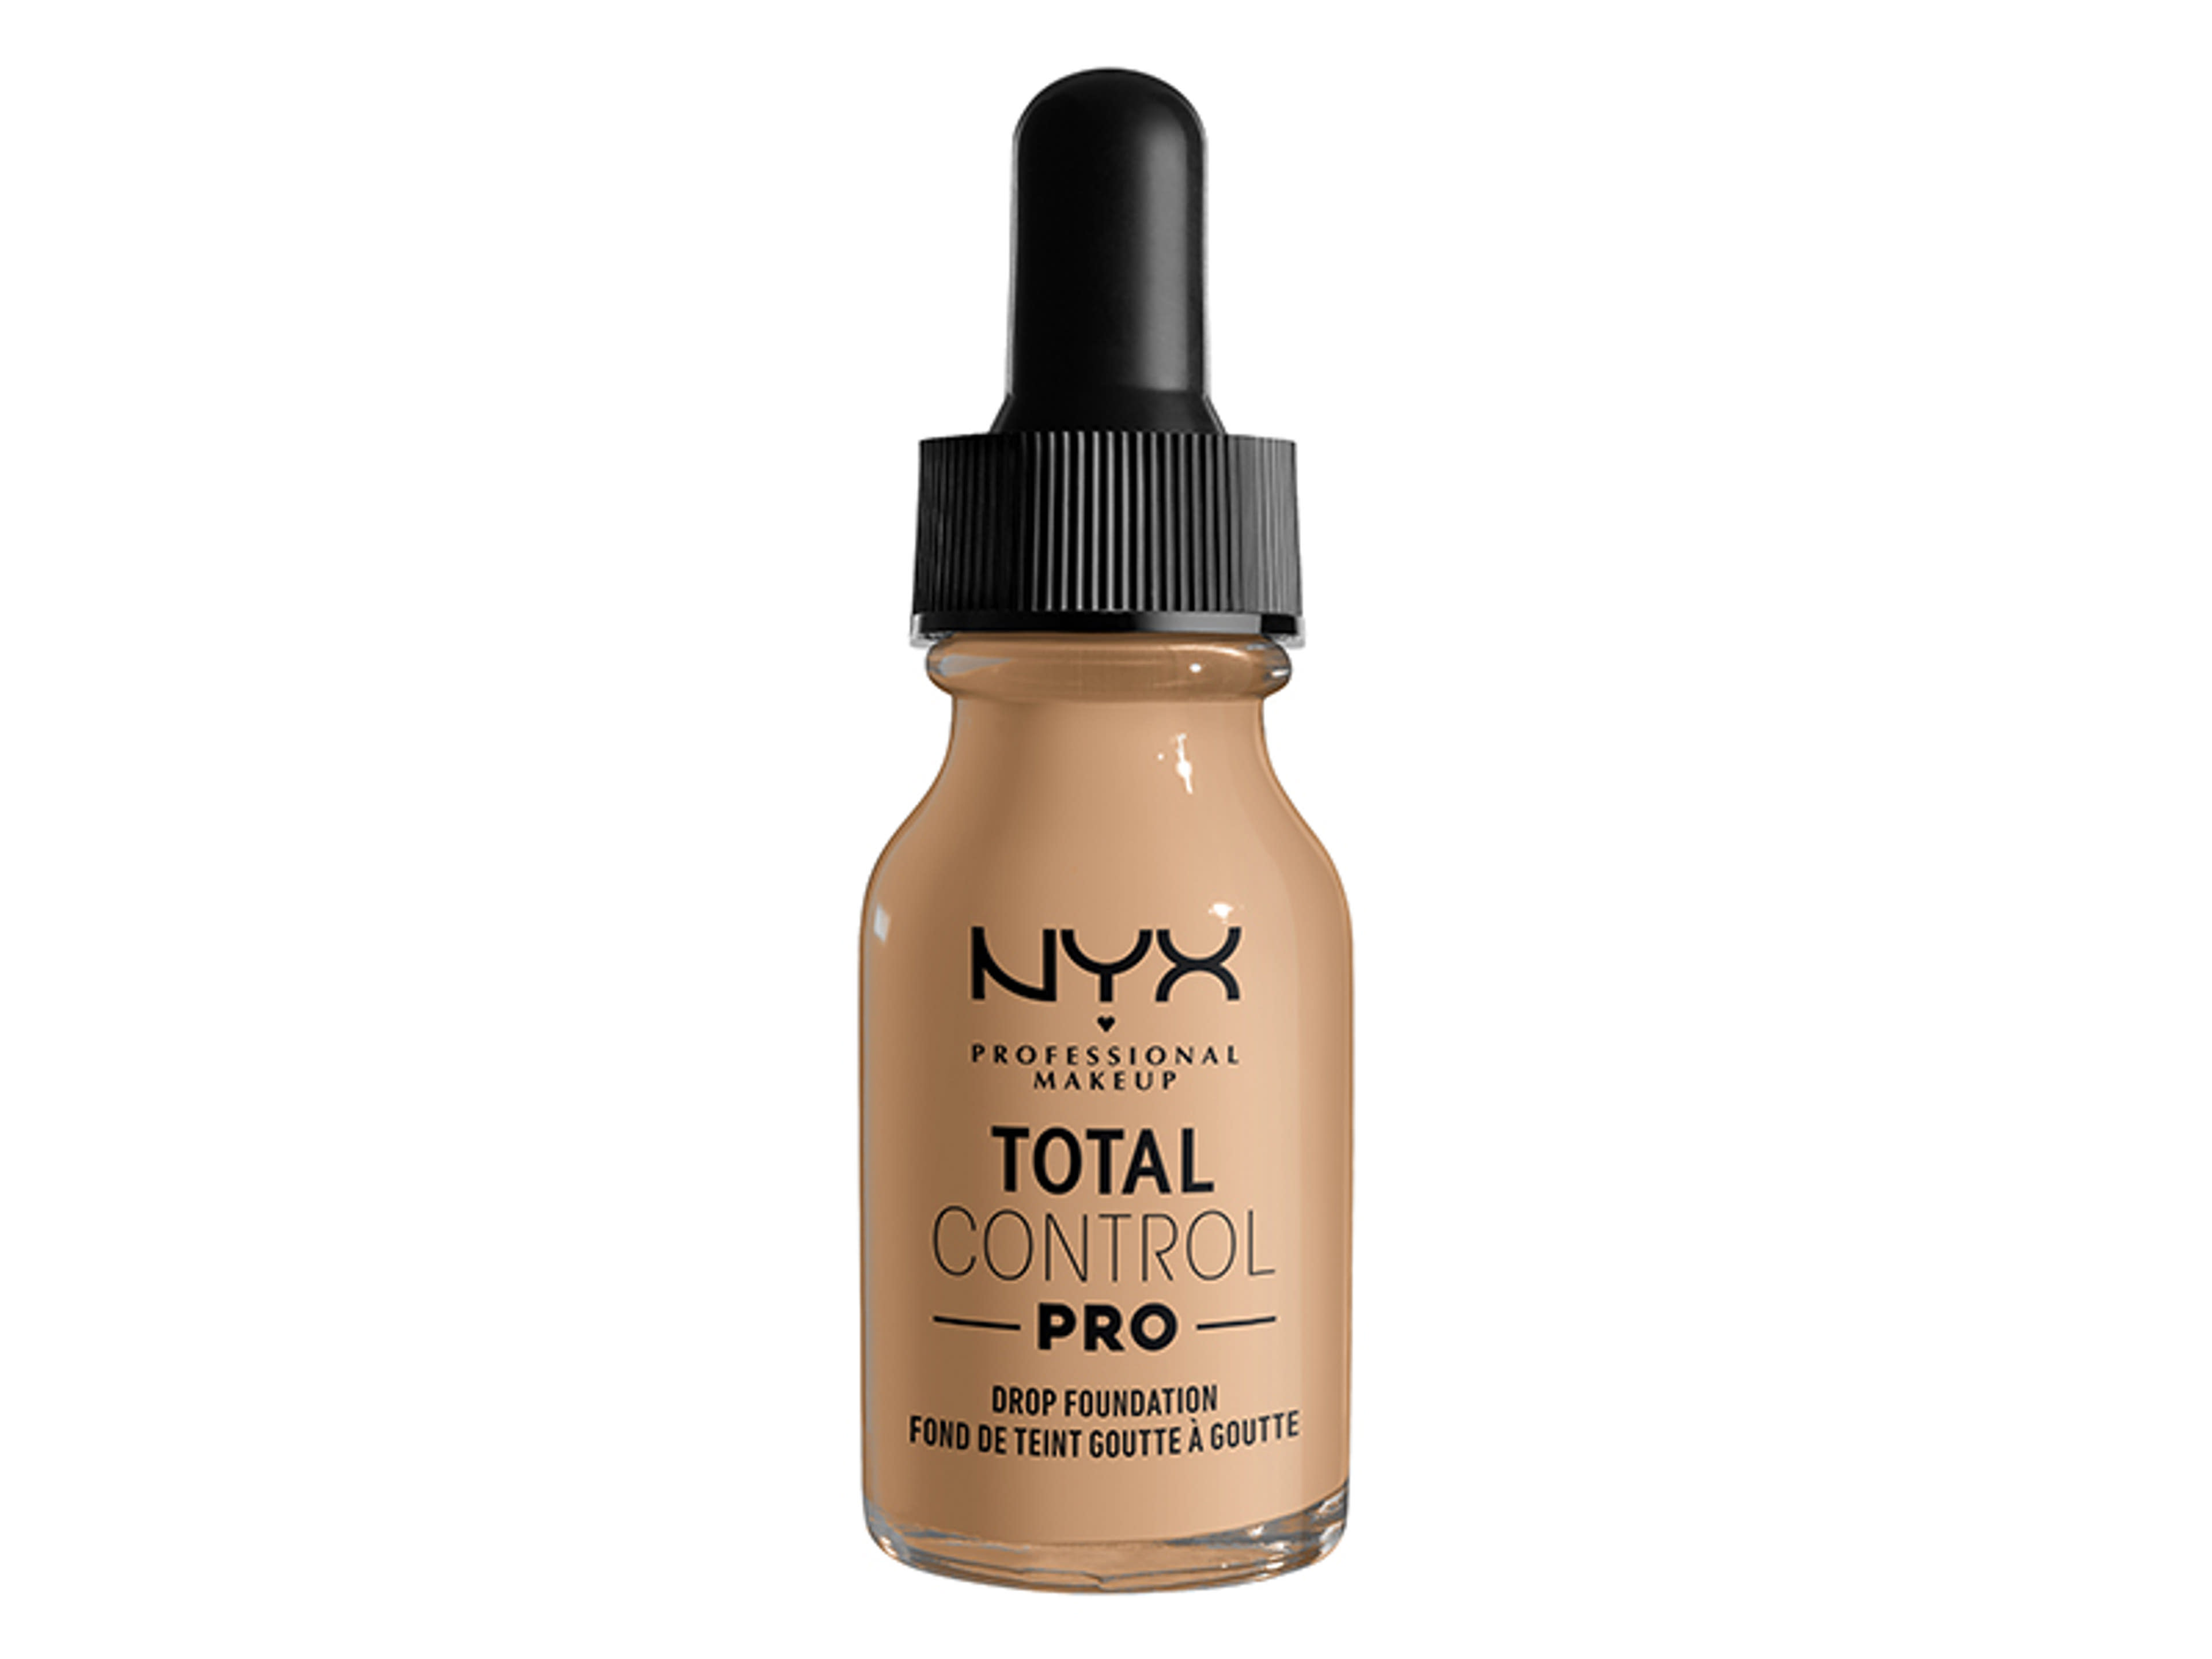 NYX Professional Makeup Total Control Pro Drop Foundation alapozó, Buff - 1 db